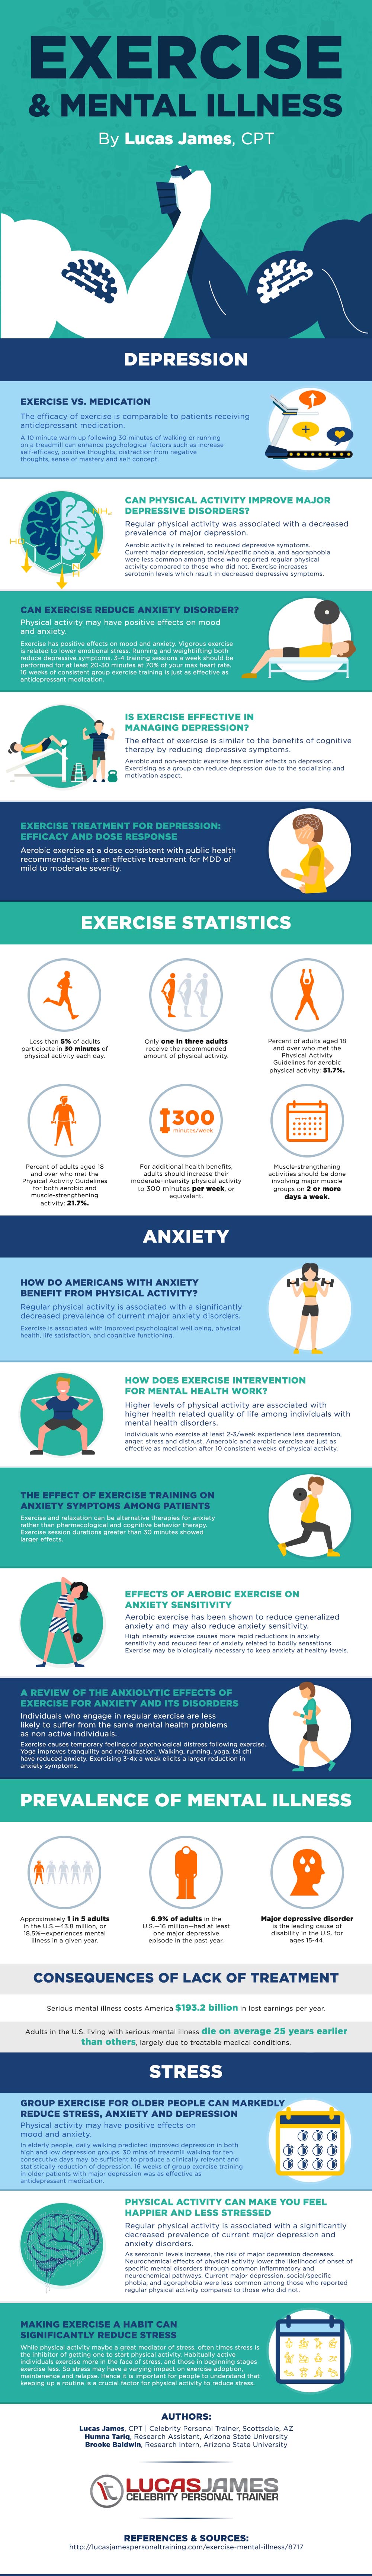 Exercise & Mental Illness